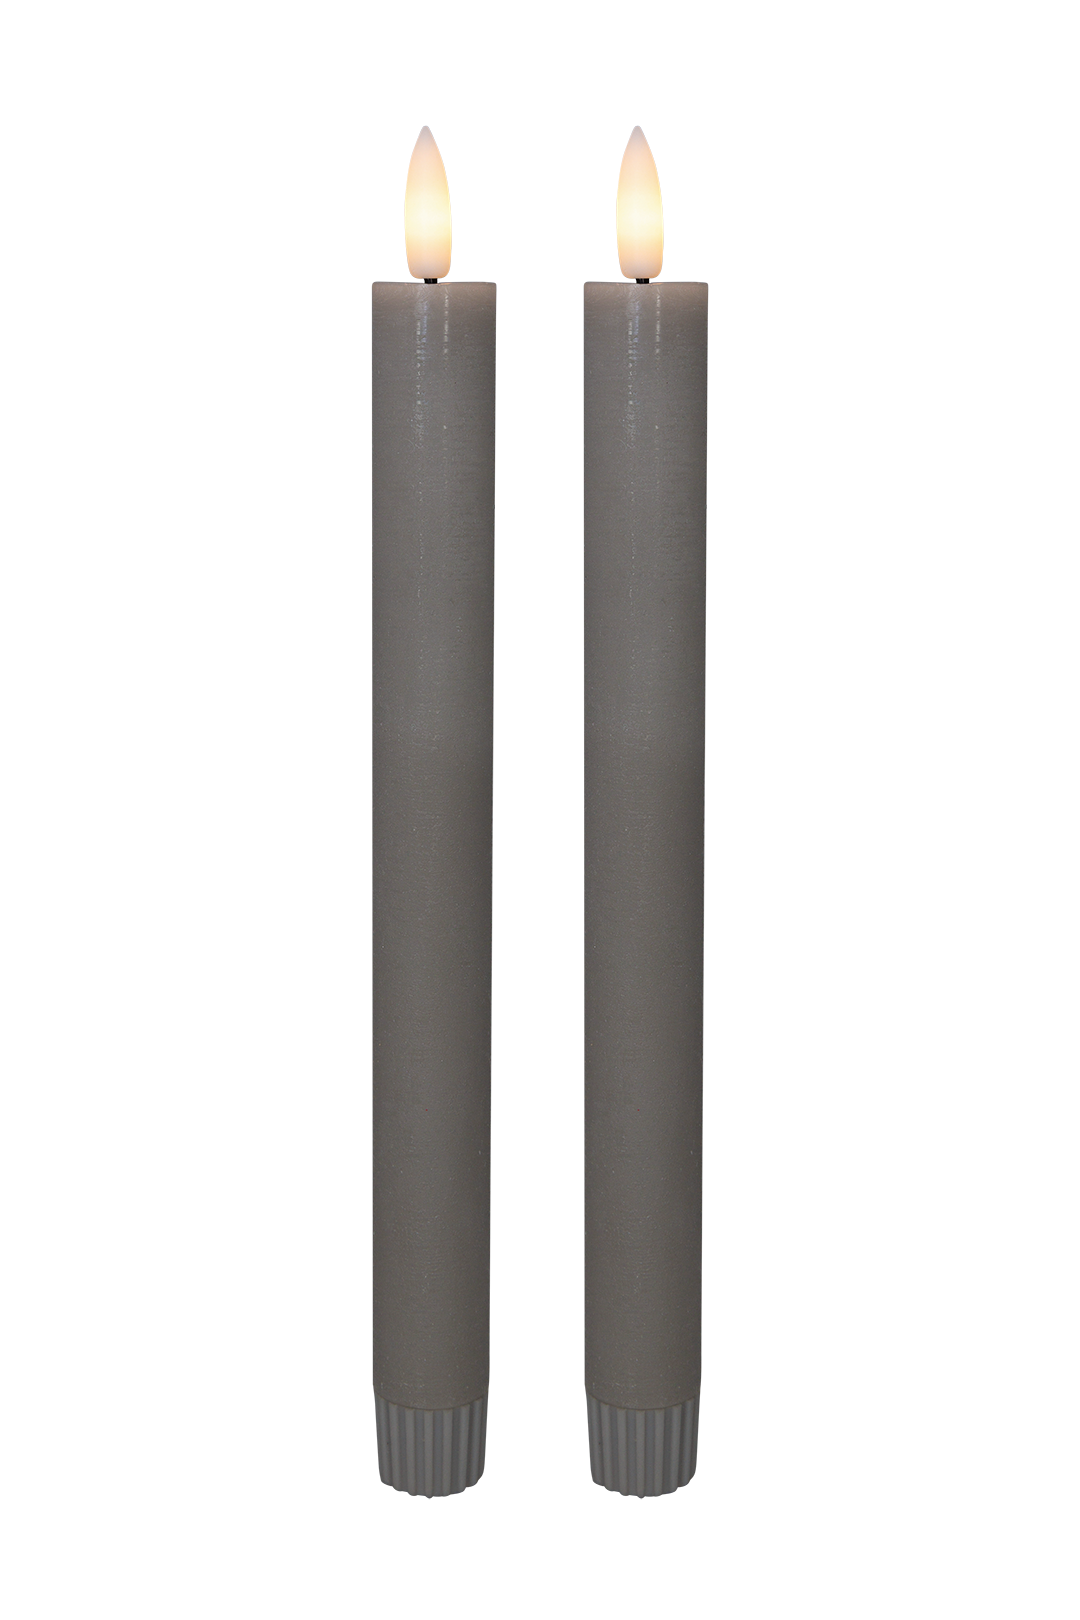 Cozzy kronelys, 3D flamme, 22,2 cm, grå, 2 stk (bruges med fjernbetjening) thumbnail